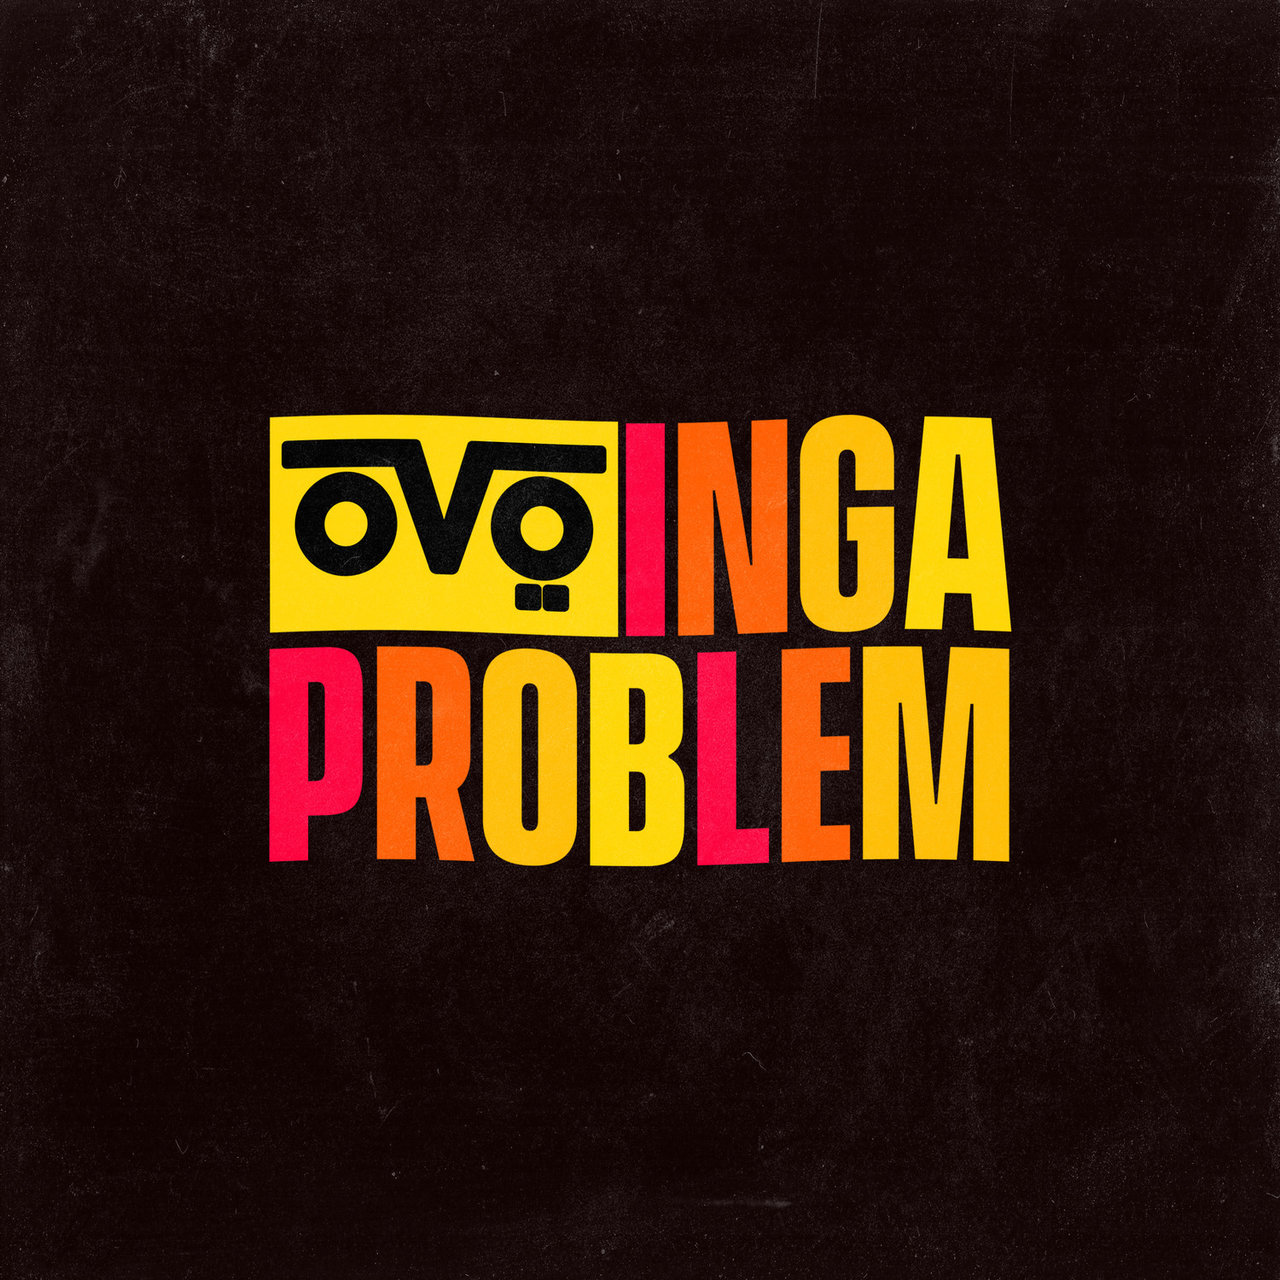 OVÖ Inga problem cover artwork